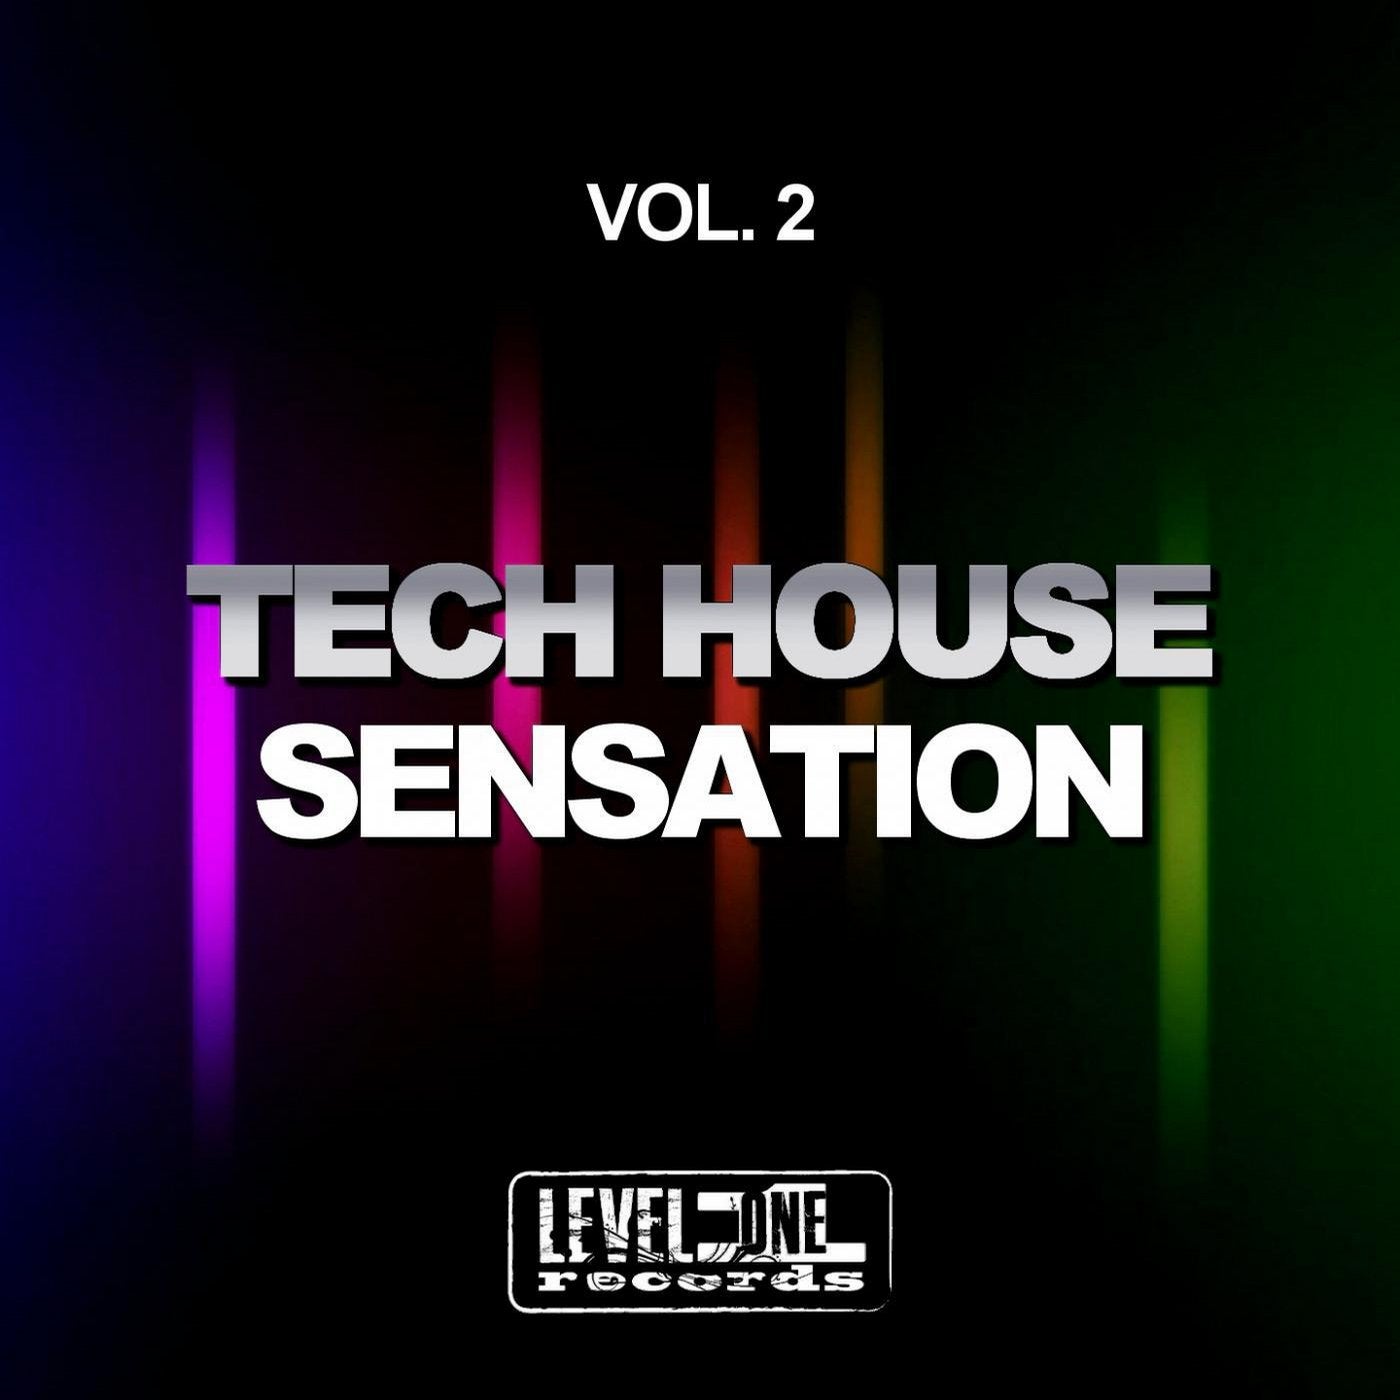 Tech House Sensation, Vol. 2